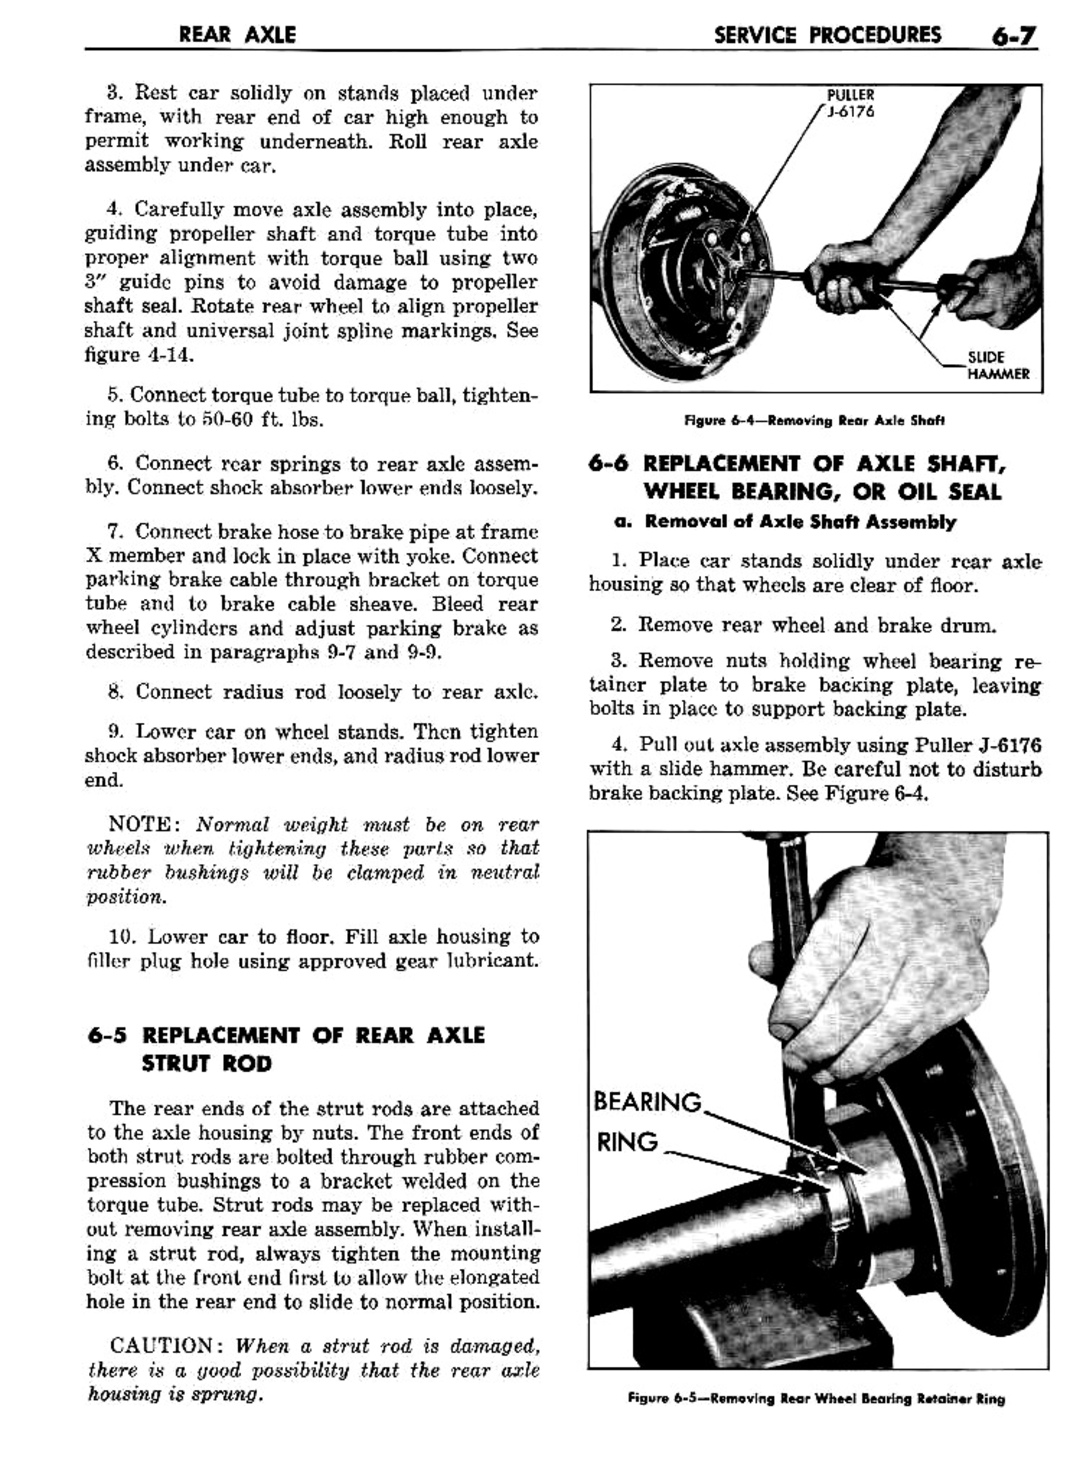 n_07 1957 Buick Shop Manual - Rear Axle-007-007.jpg